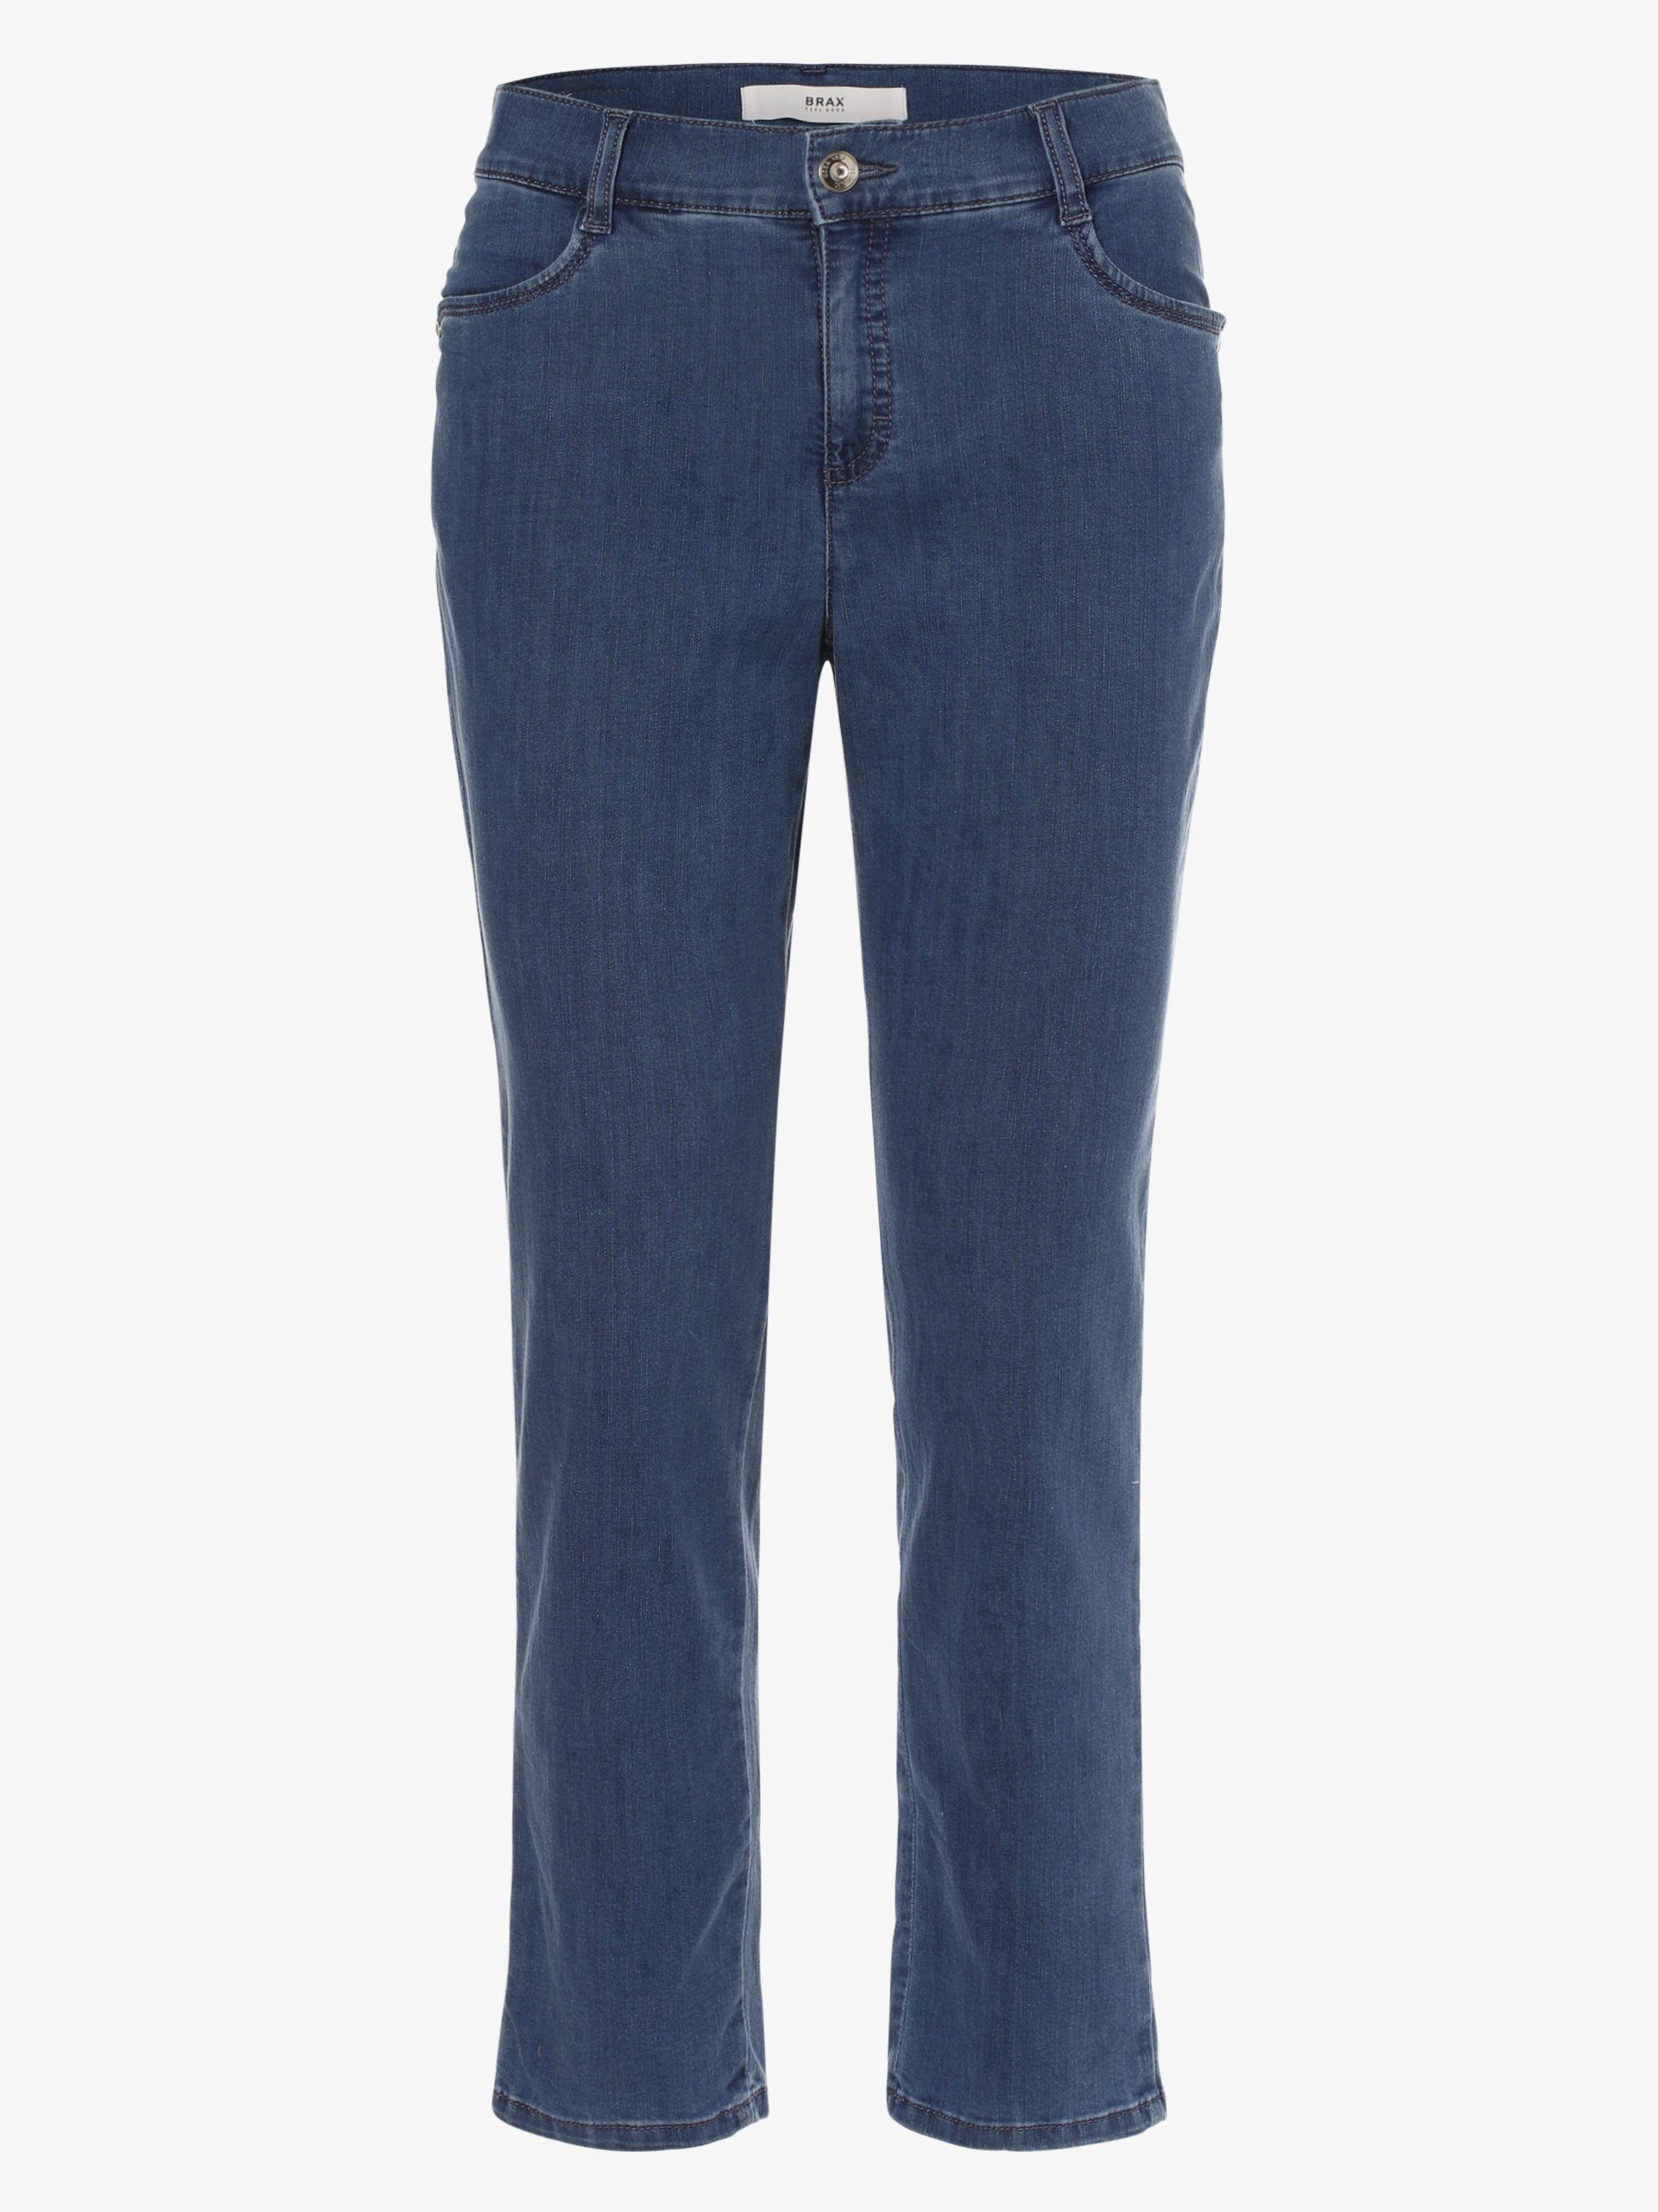 risico Grace Reactor BRAX Damen Jeans - Siri online kaufen | PEEK-UND-CLOPPENBURG.DE